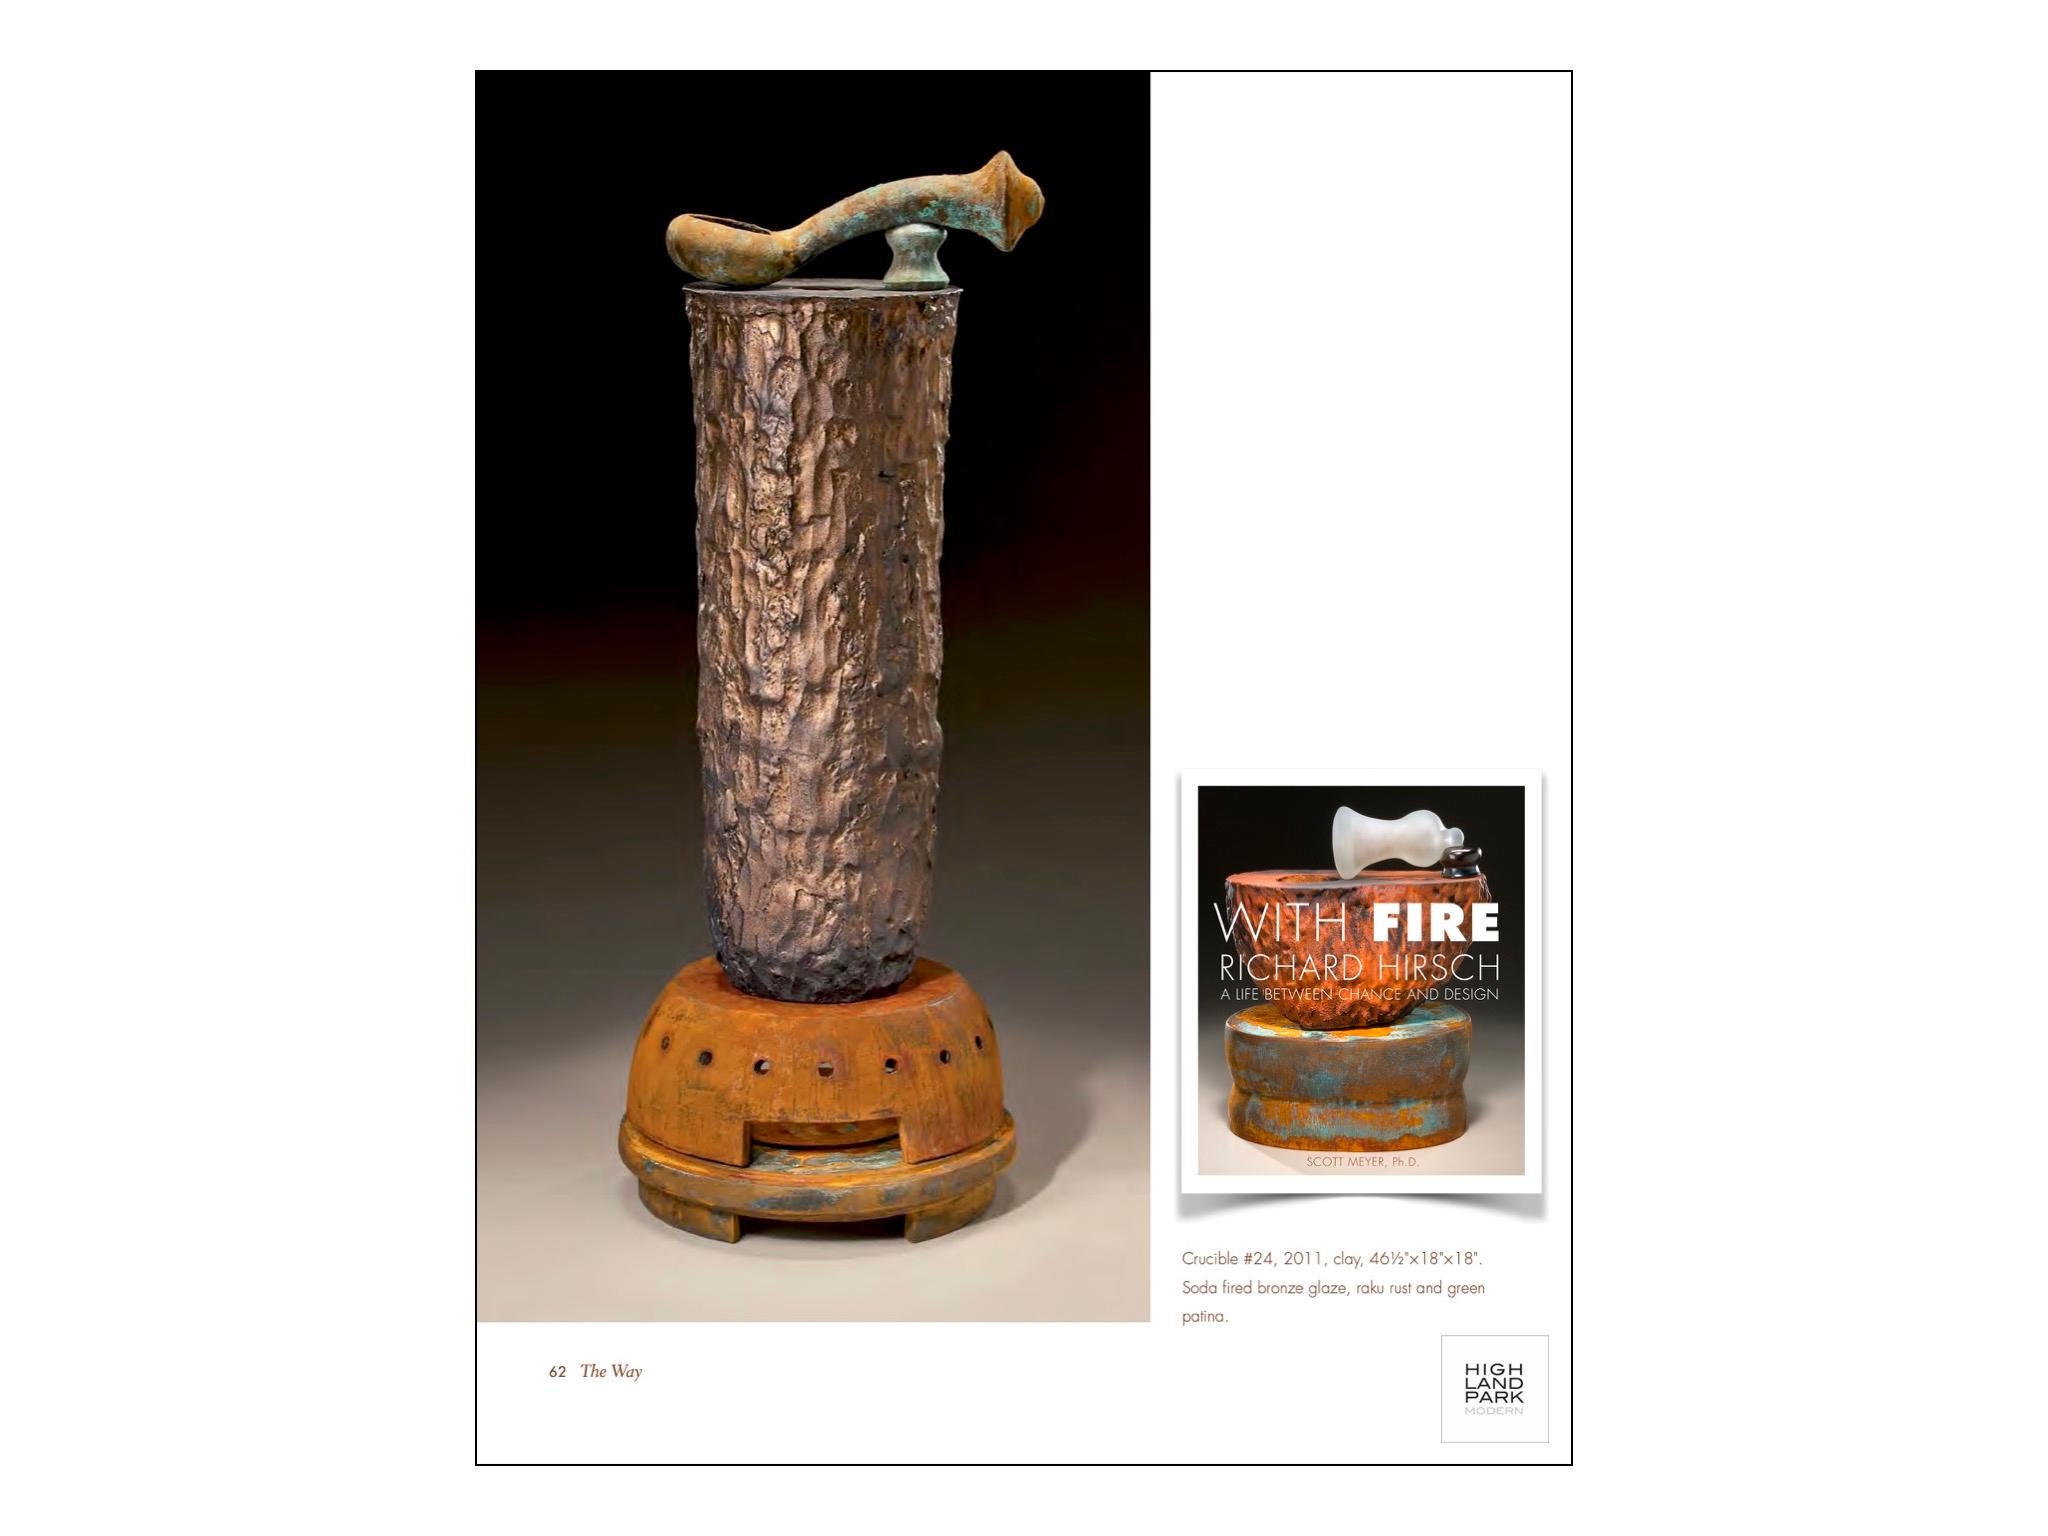 Richard Hirsch Glazed Ceramic Crucible Sculpture #24, 2011 For Sale 1